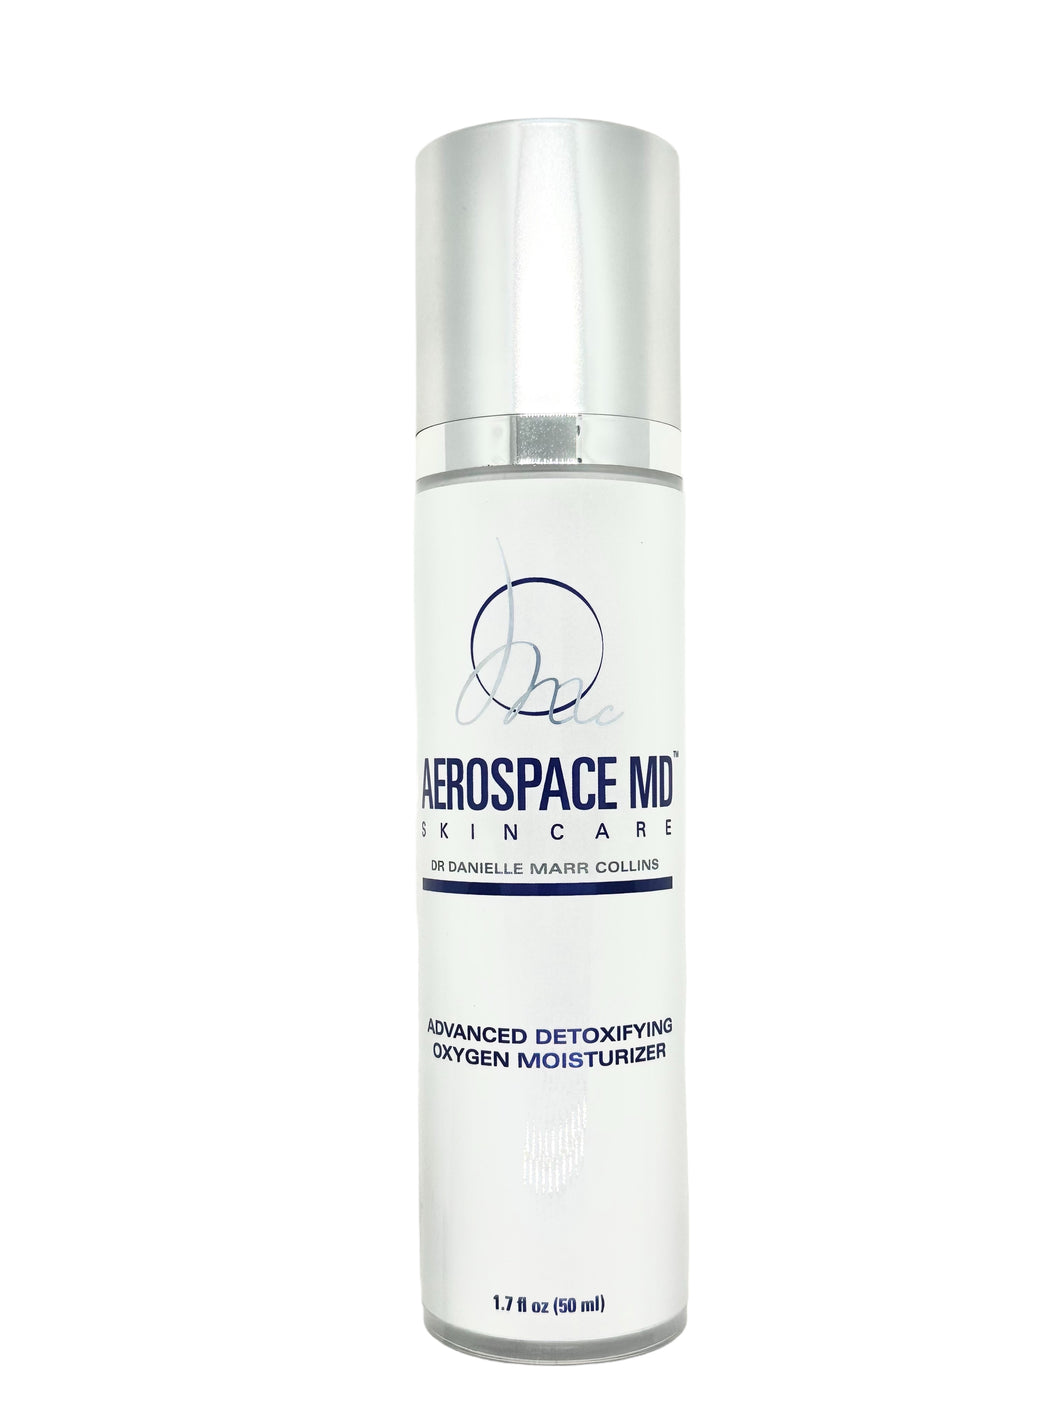 AEROSPACE MD Advanced Detoxifying Oxygenating Moisturiser